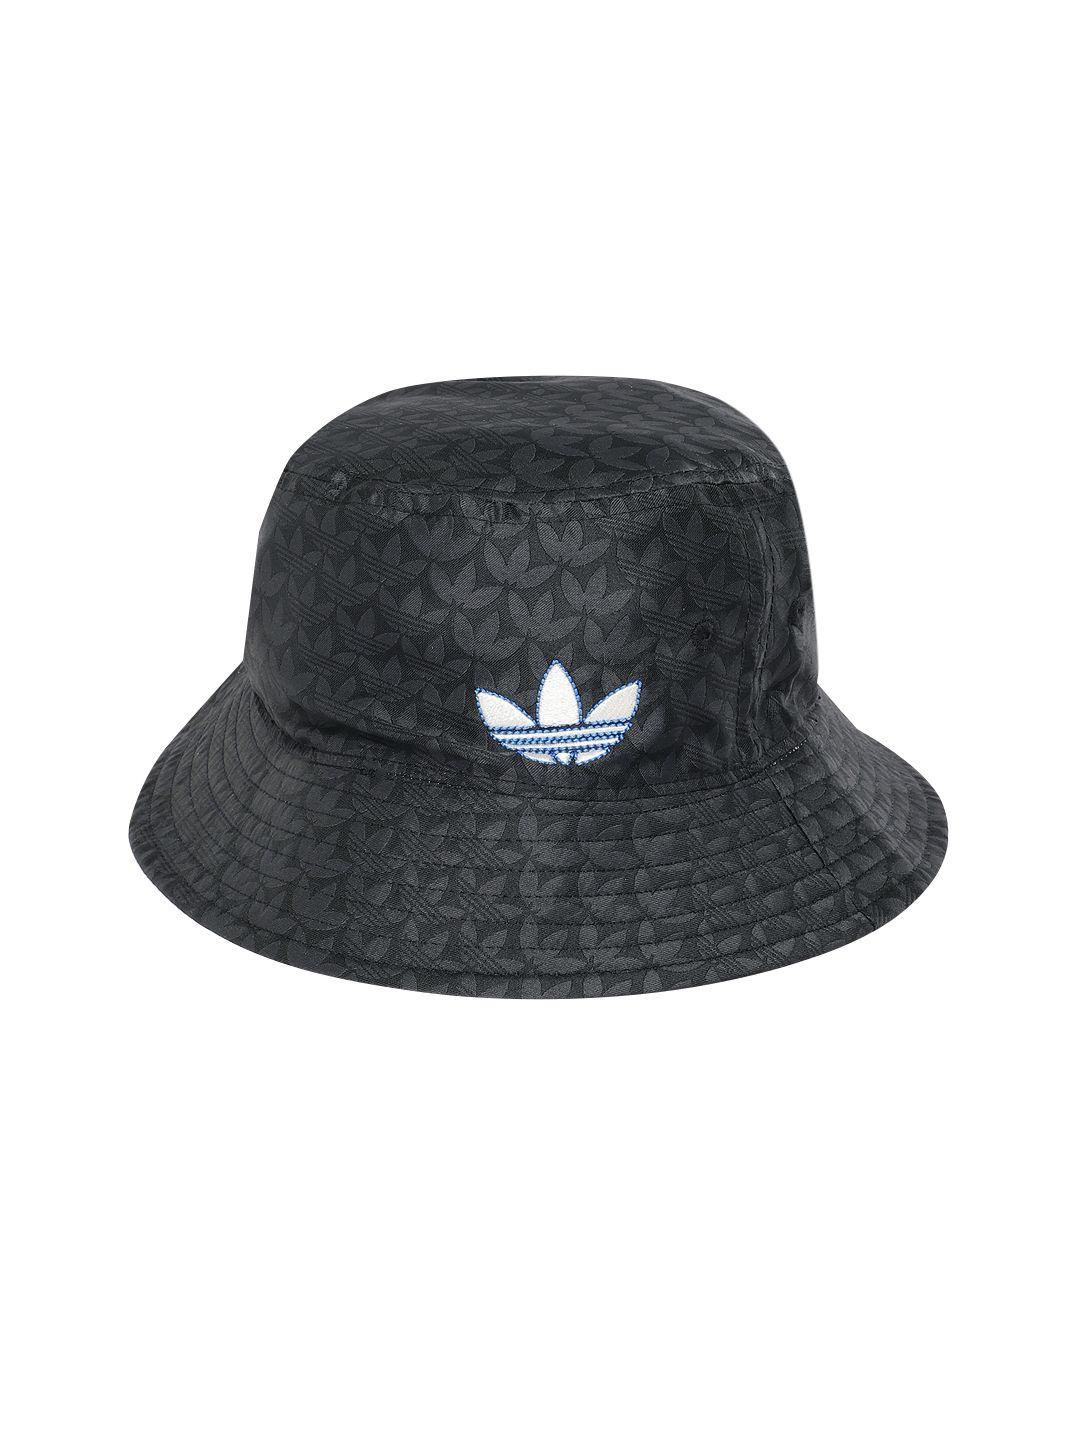 adidas originals unisex brand logo printed reversible bucket hat